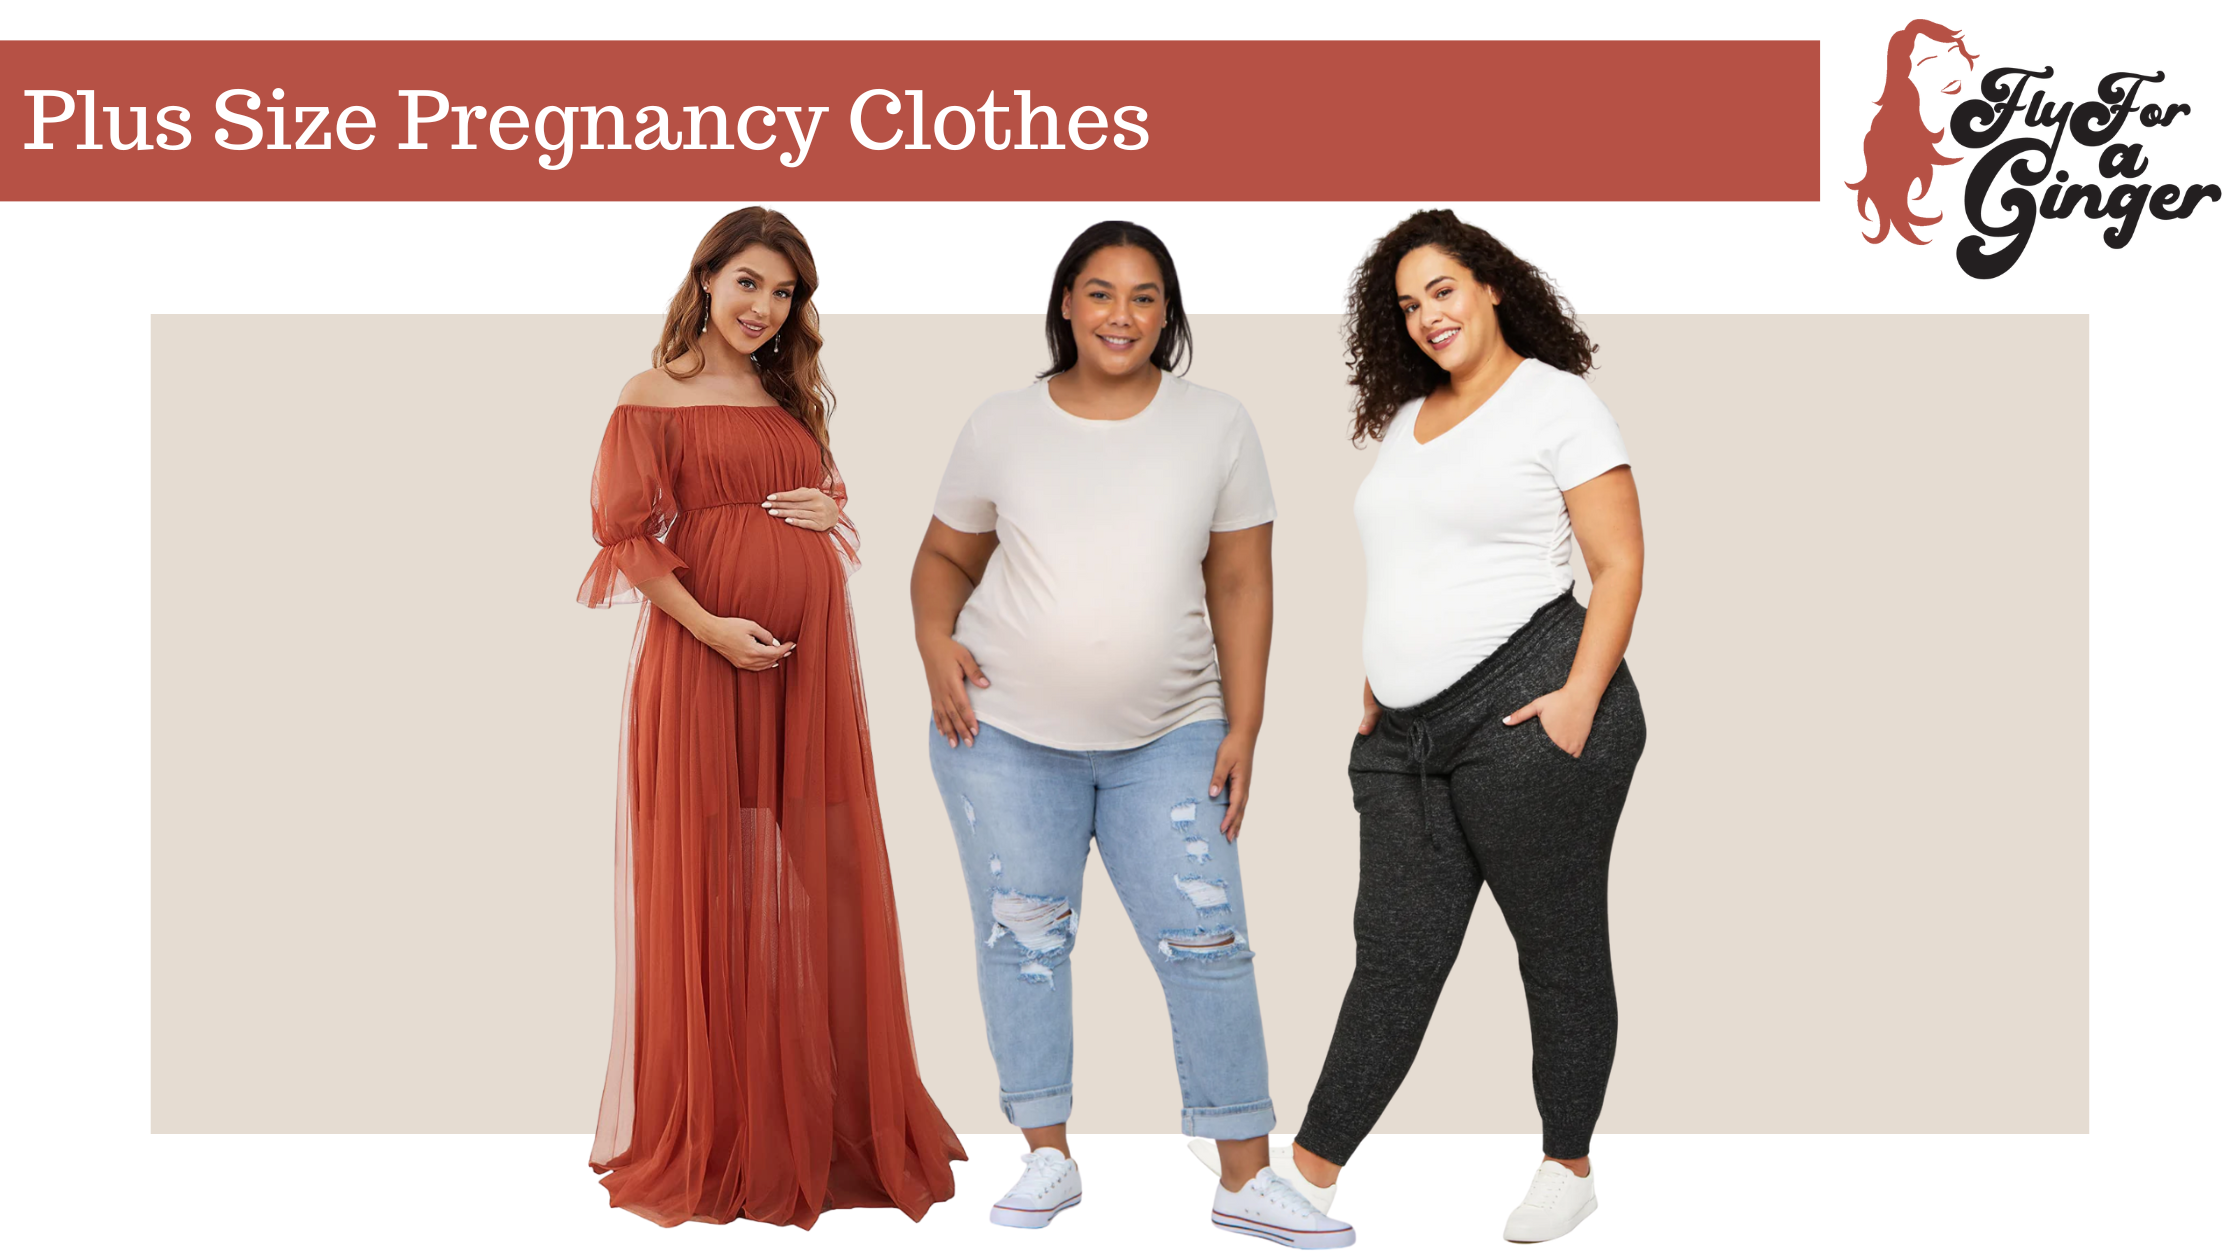 Motherhood Maternity Bras Maternity Clothes - Macy's